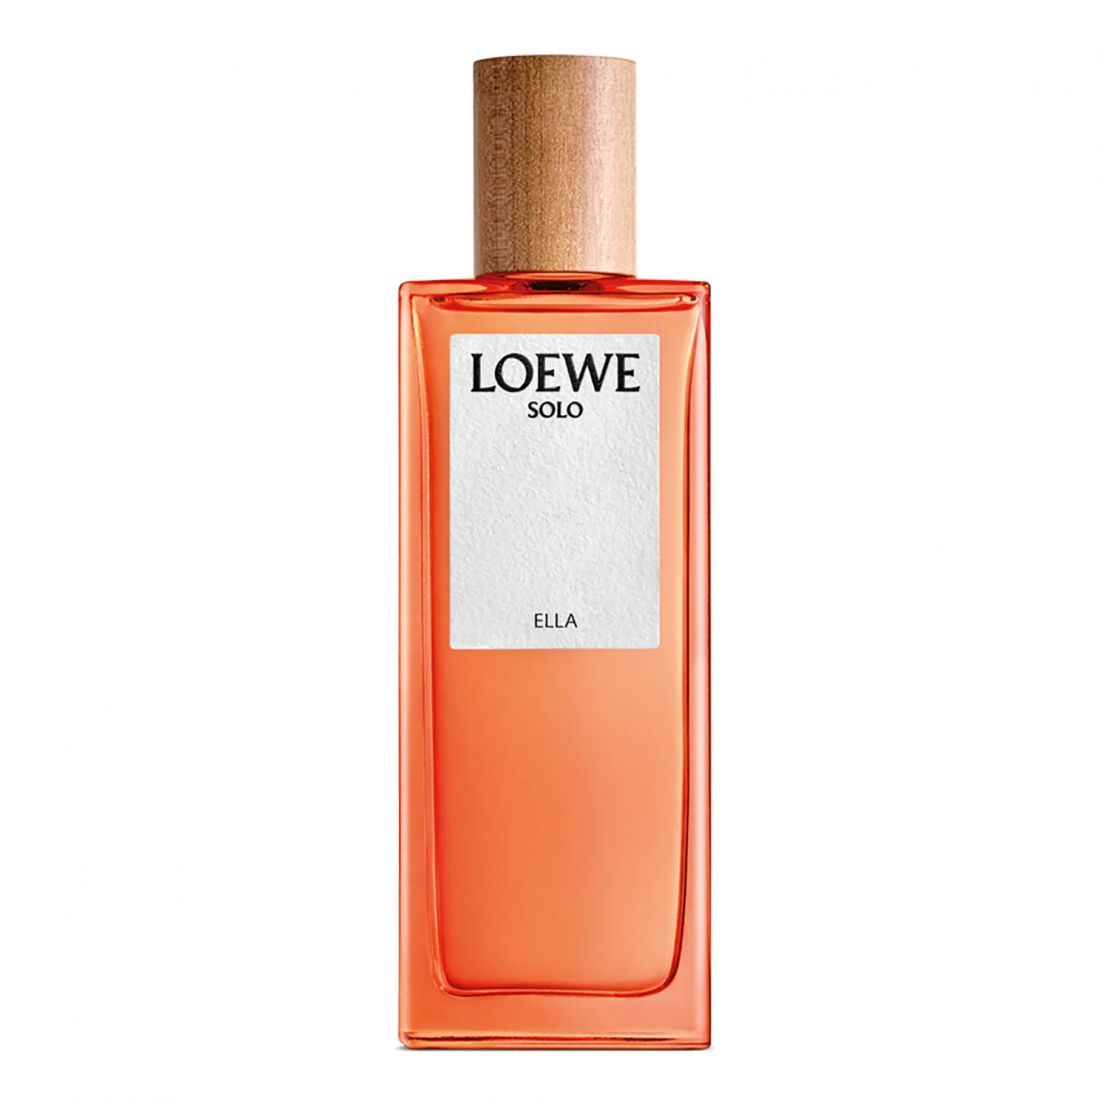 Loewe - Eau de parfum 'Solo Ella' - 100 ml